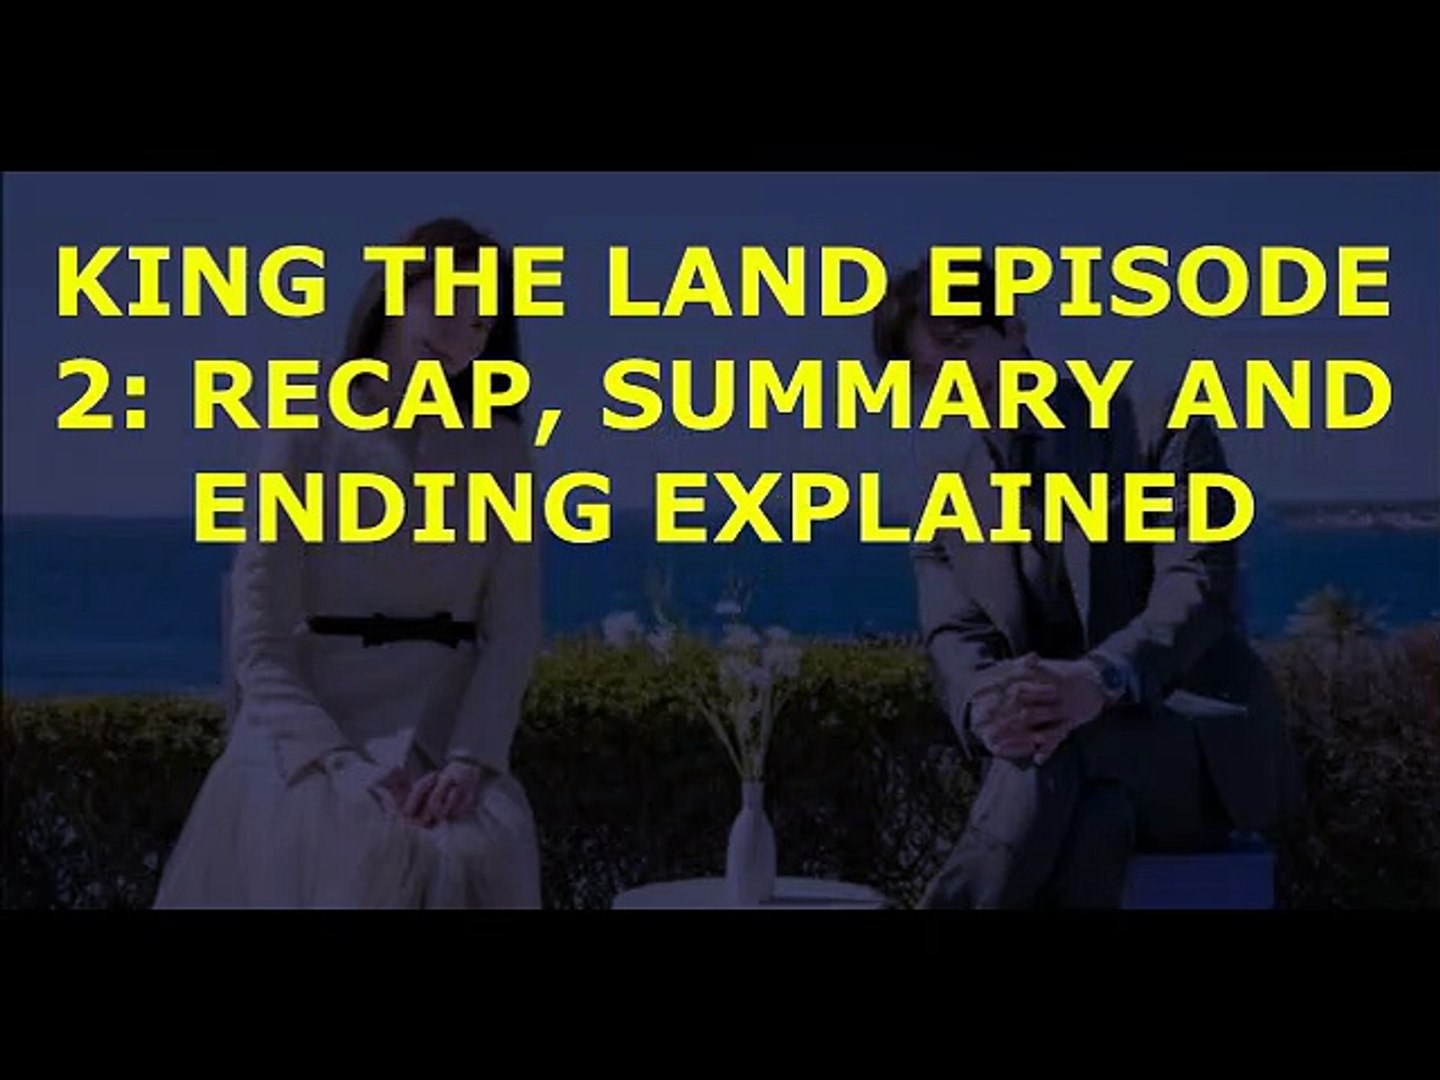 King the Land ending explained